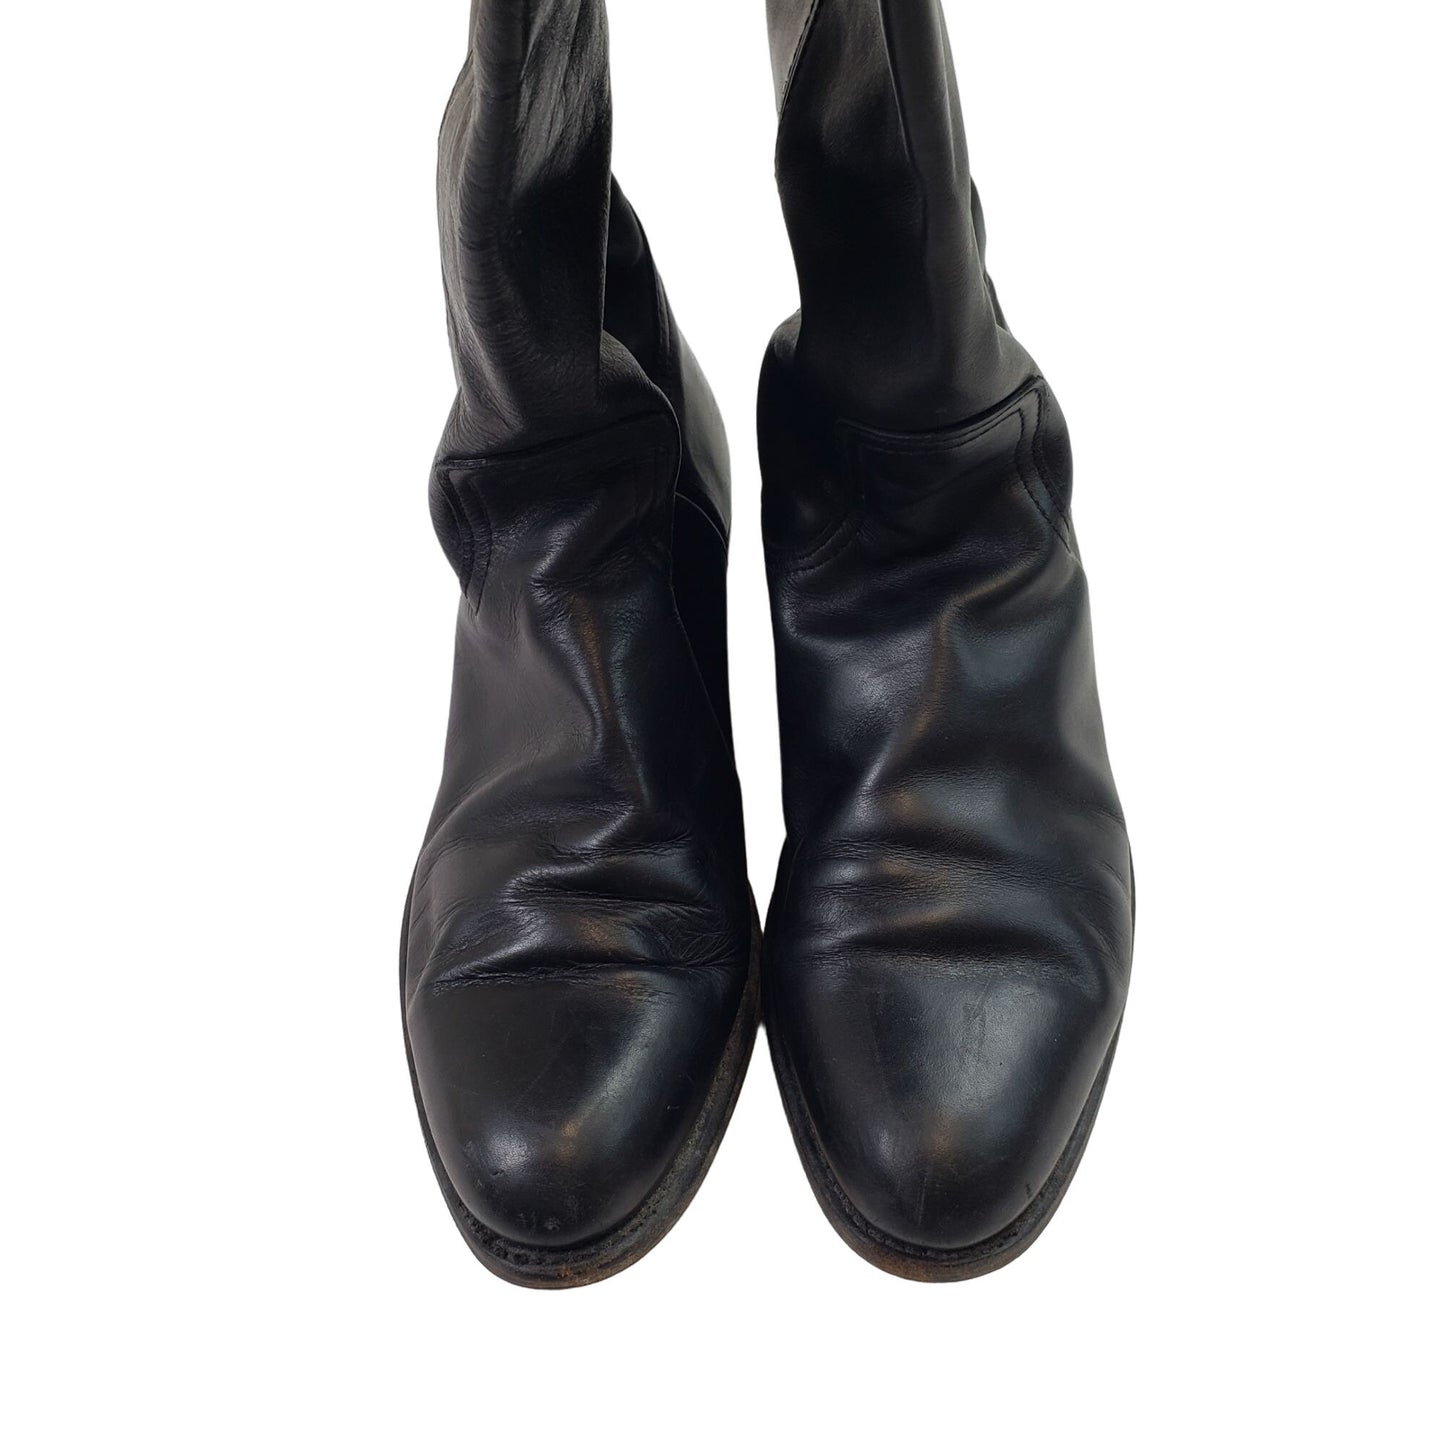 Frye Black Leather Knee High Boots Size 3 UK (Size 5 US)